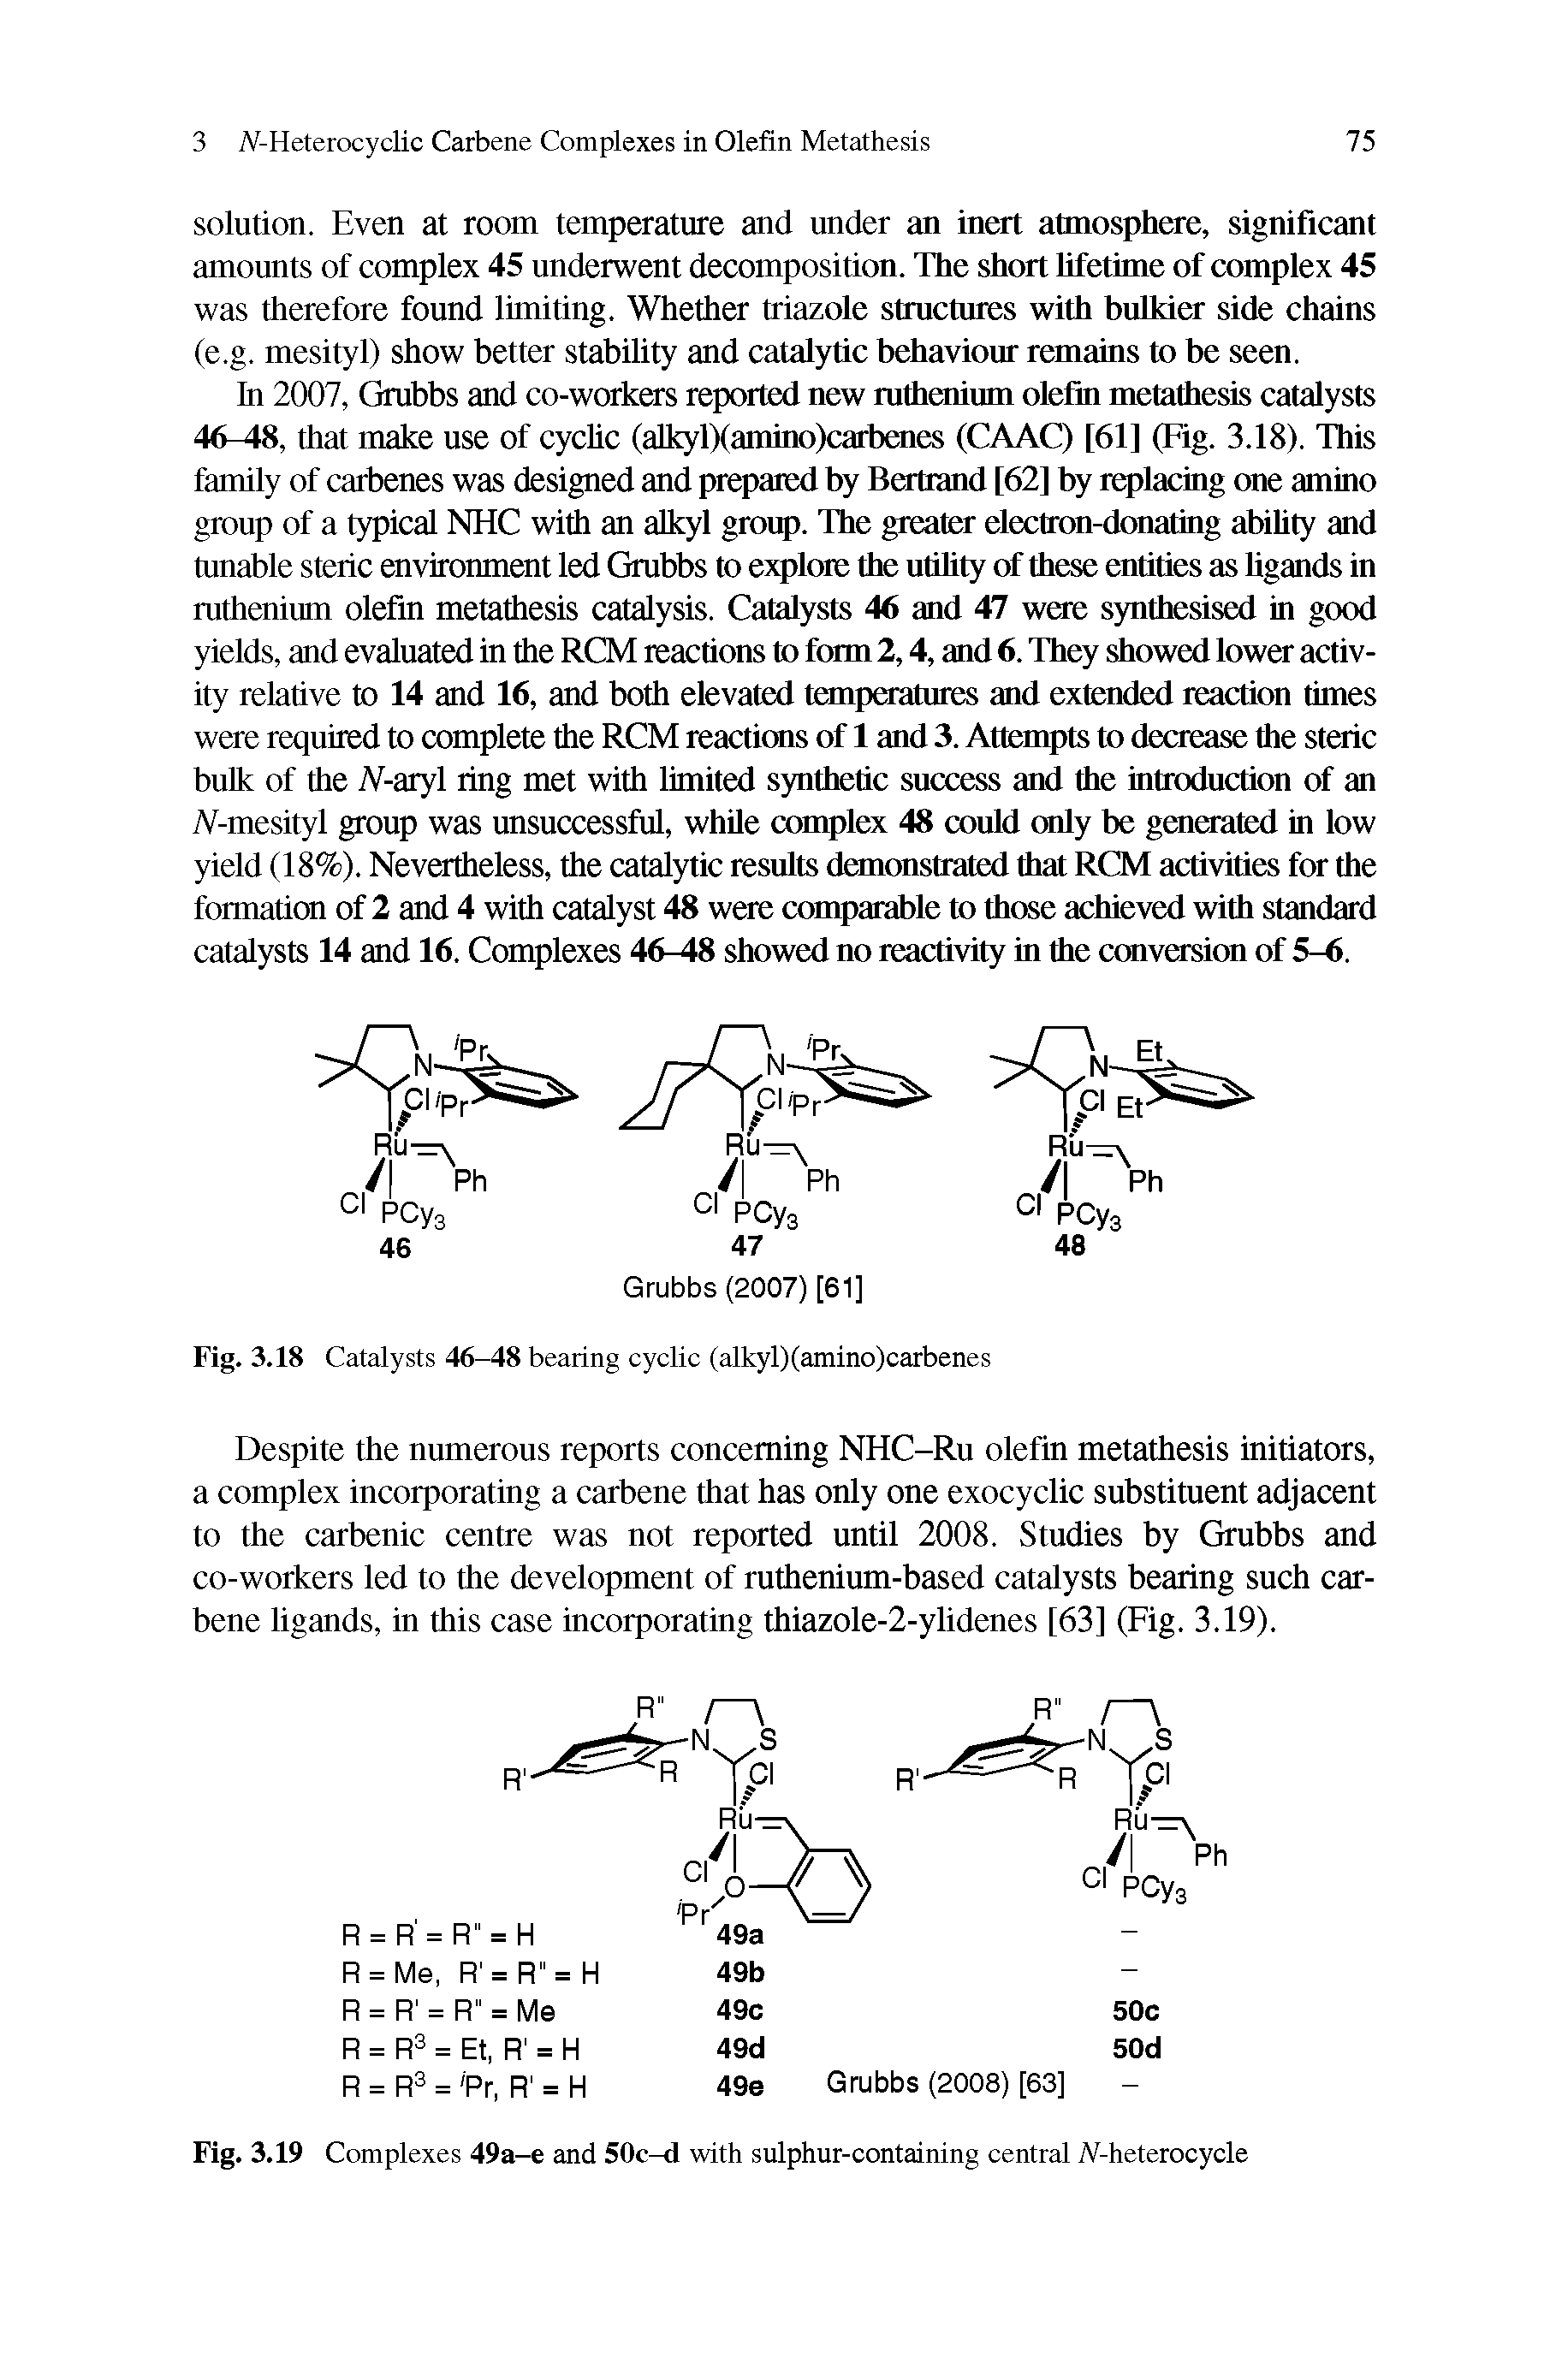 Fig. 3.18 Catalysts 46-48 bearing cyclic (alkyl)(amino)carbenes...